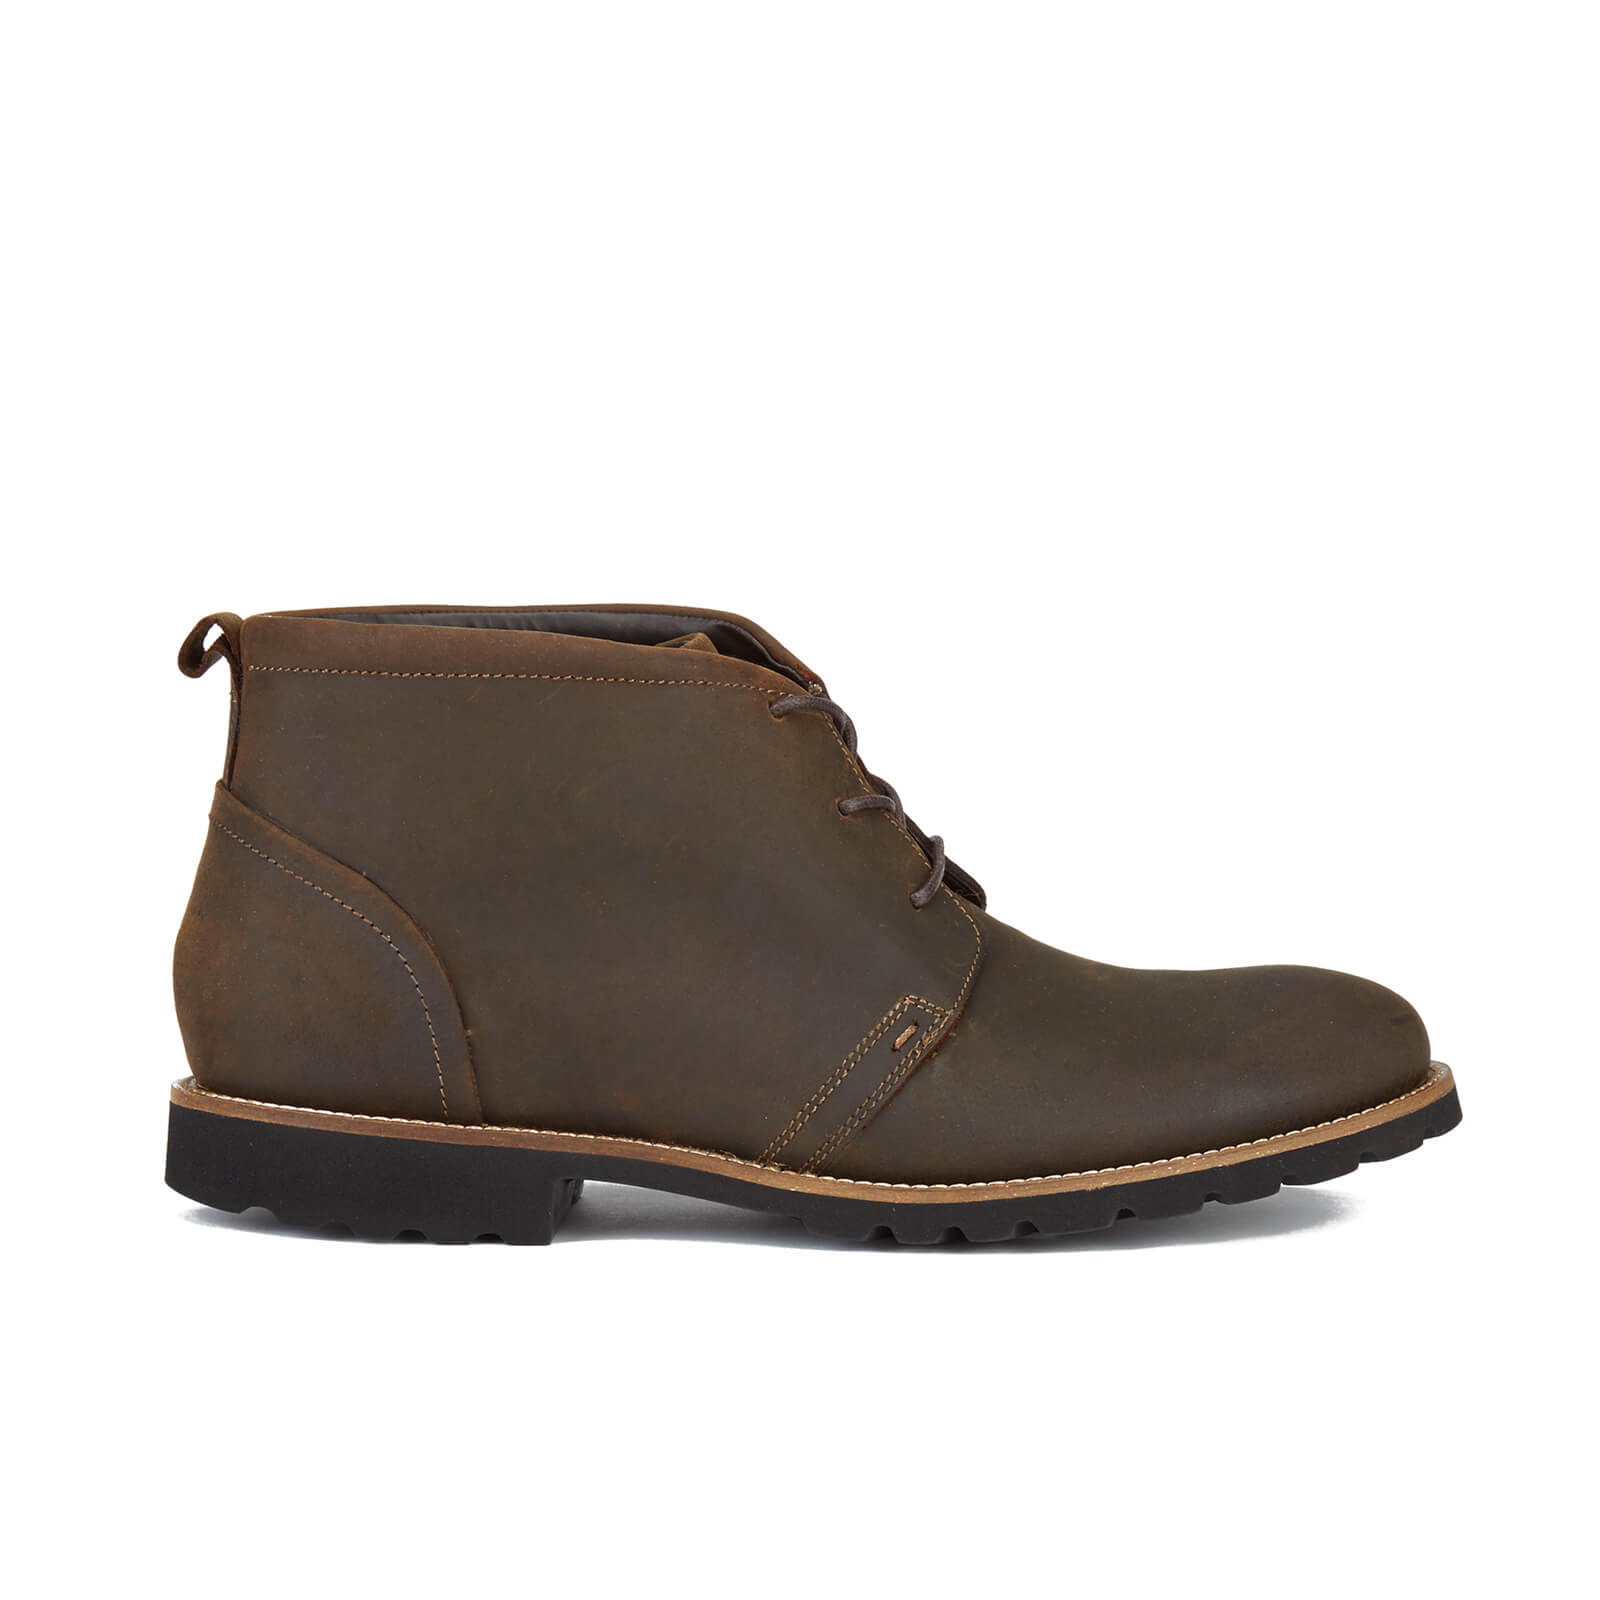 rockport sharp & ready leather chukka boots